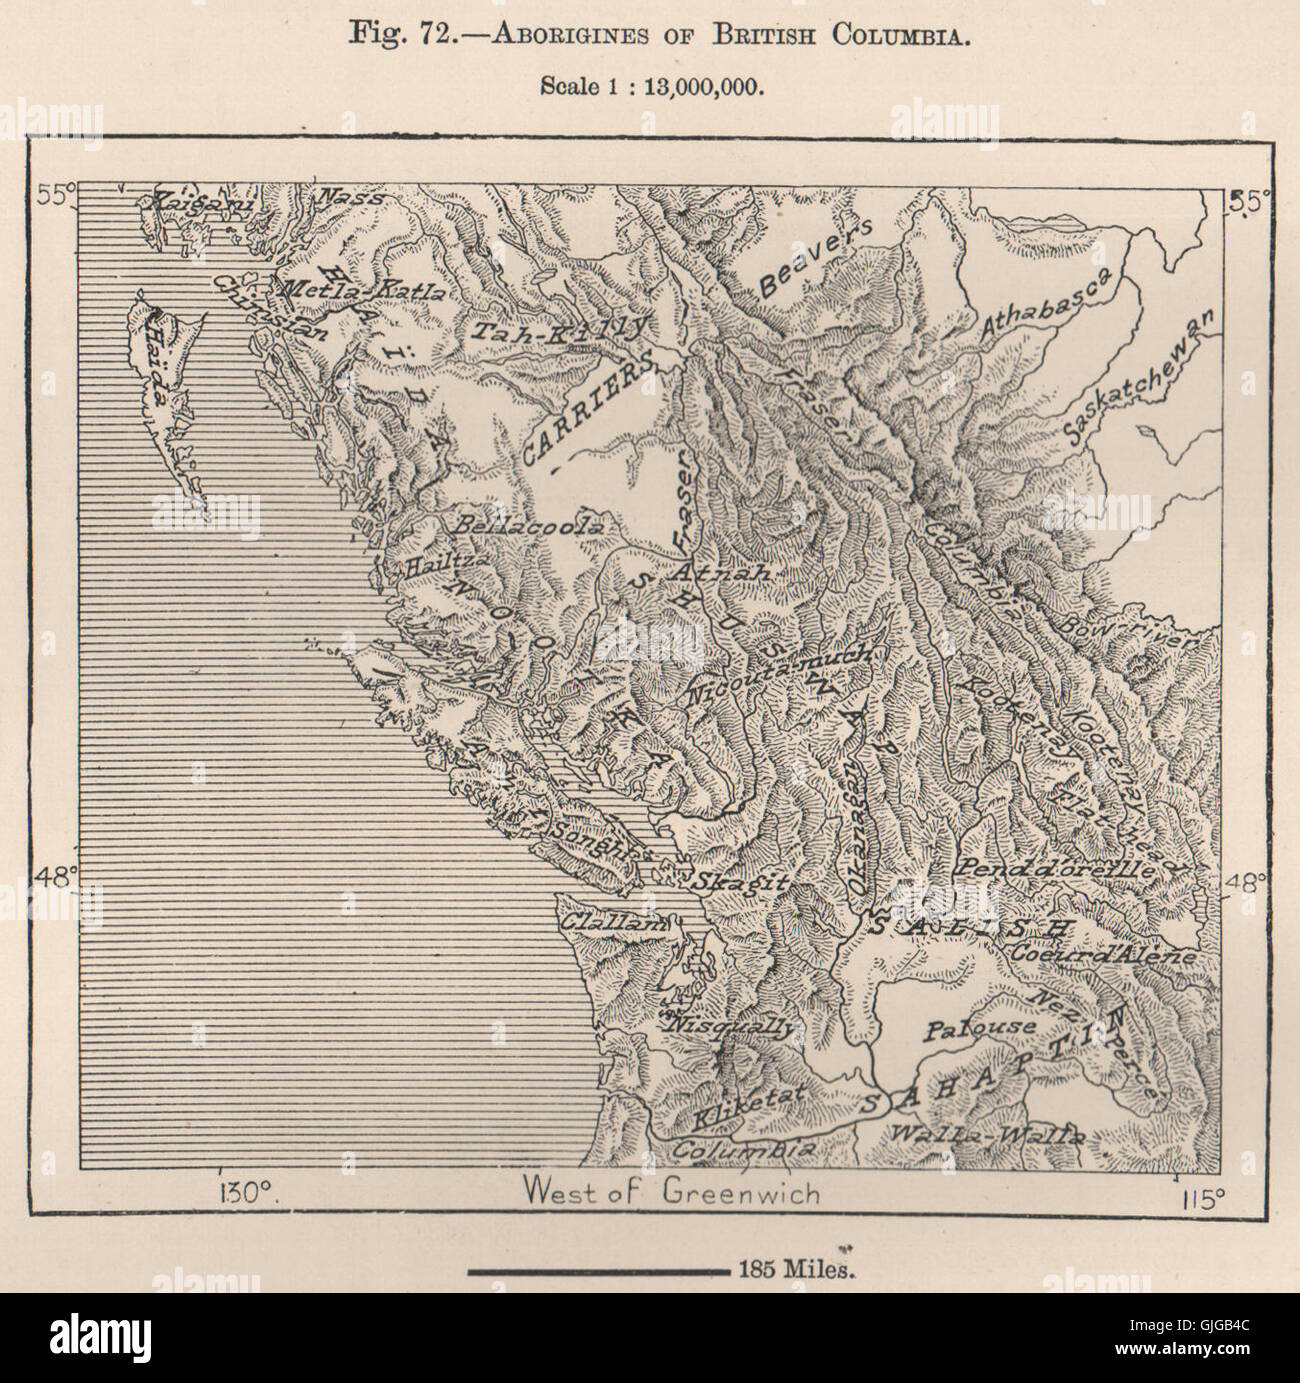 Aborigines/Native Amerika von British Columbia. Kanada, 1885 Antike Landkarte Stockfoto